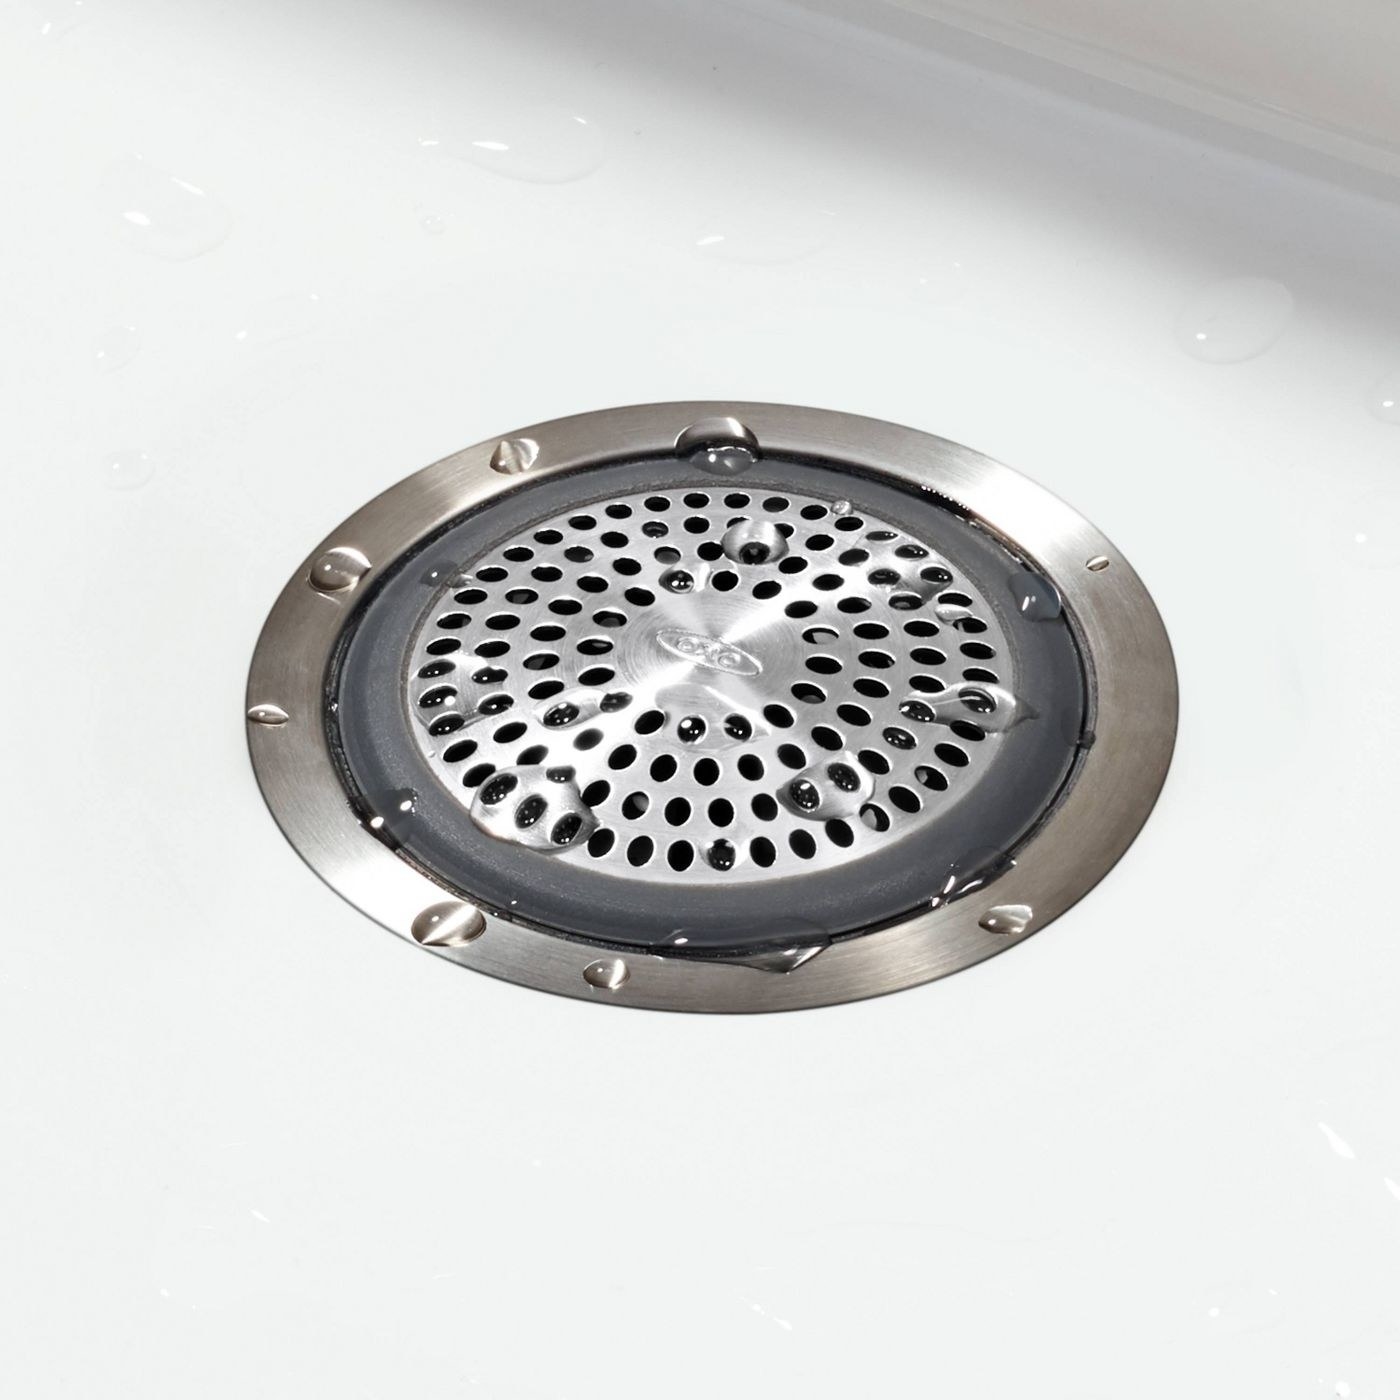 oxo drain protector in a bathtub drain